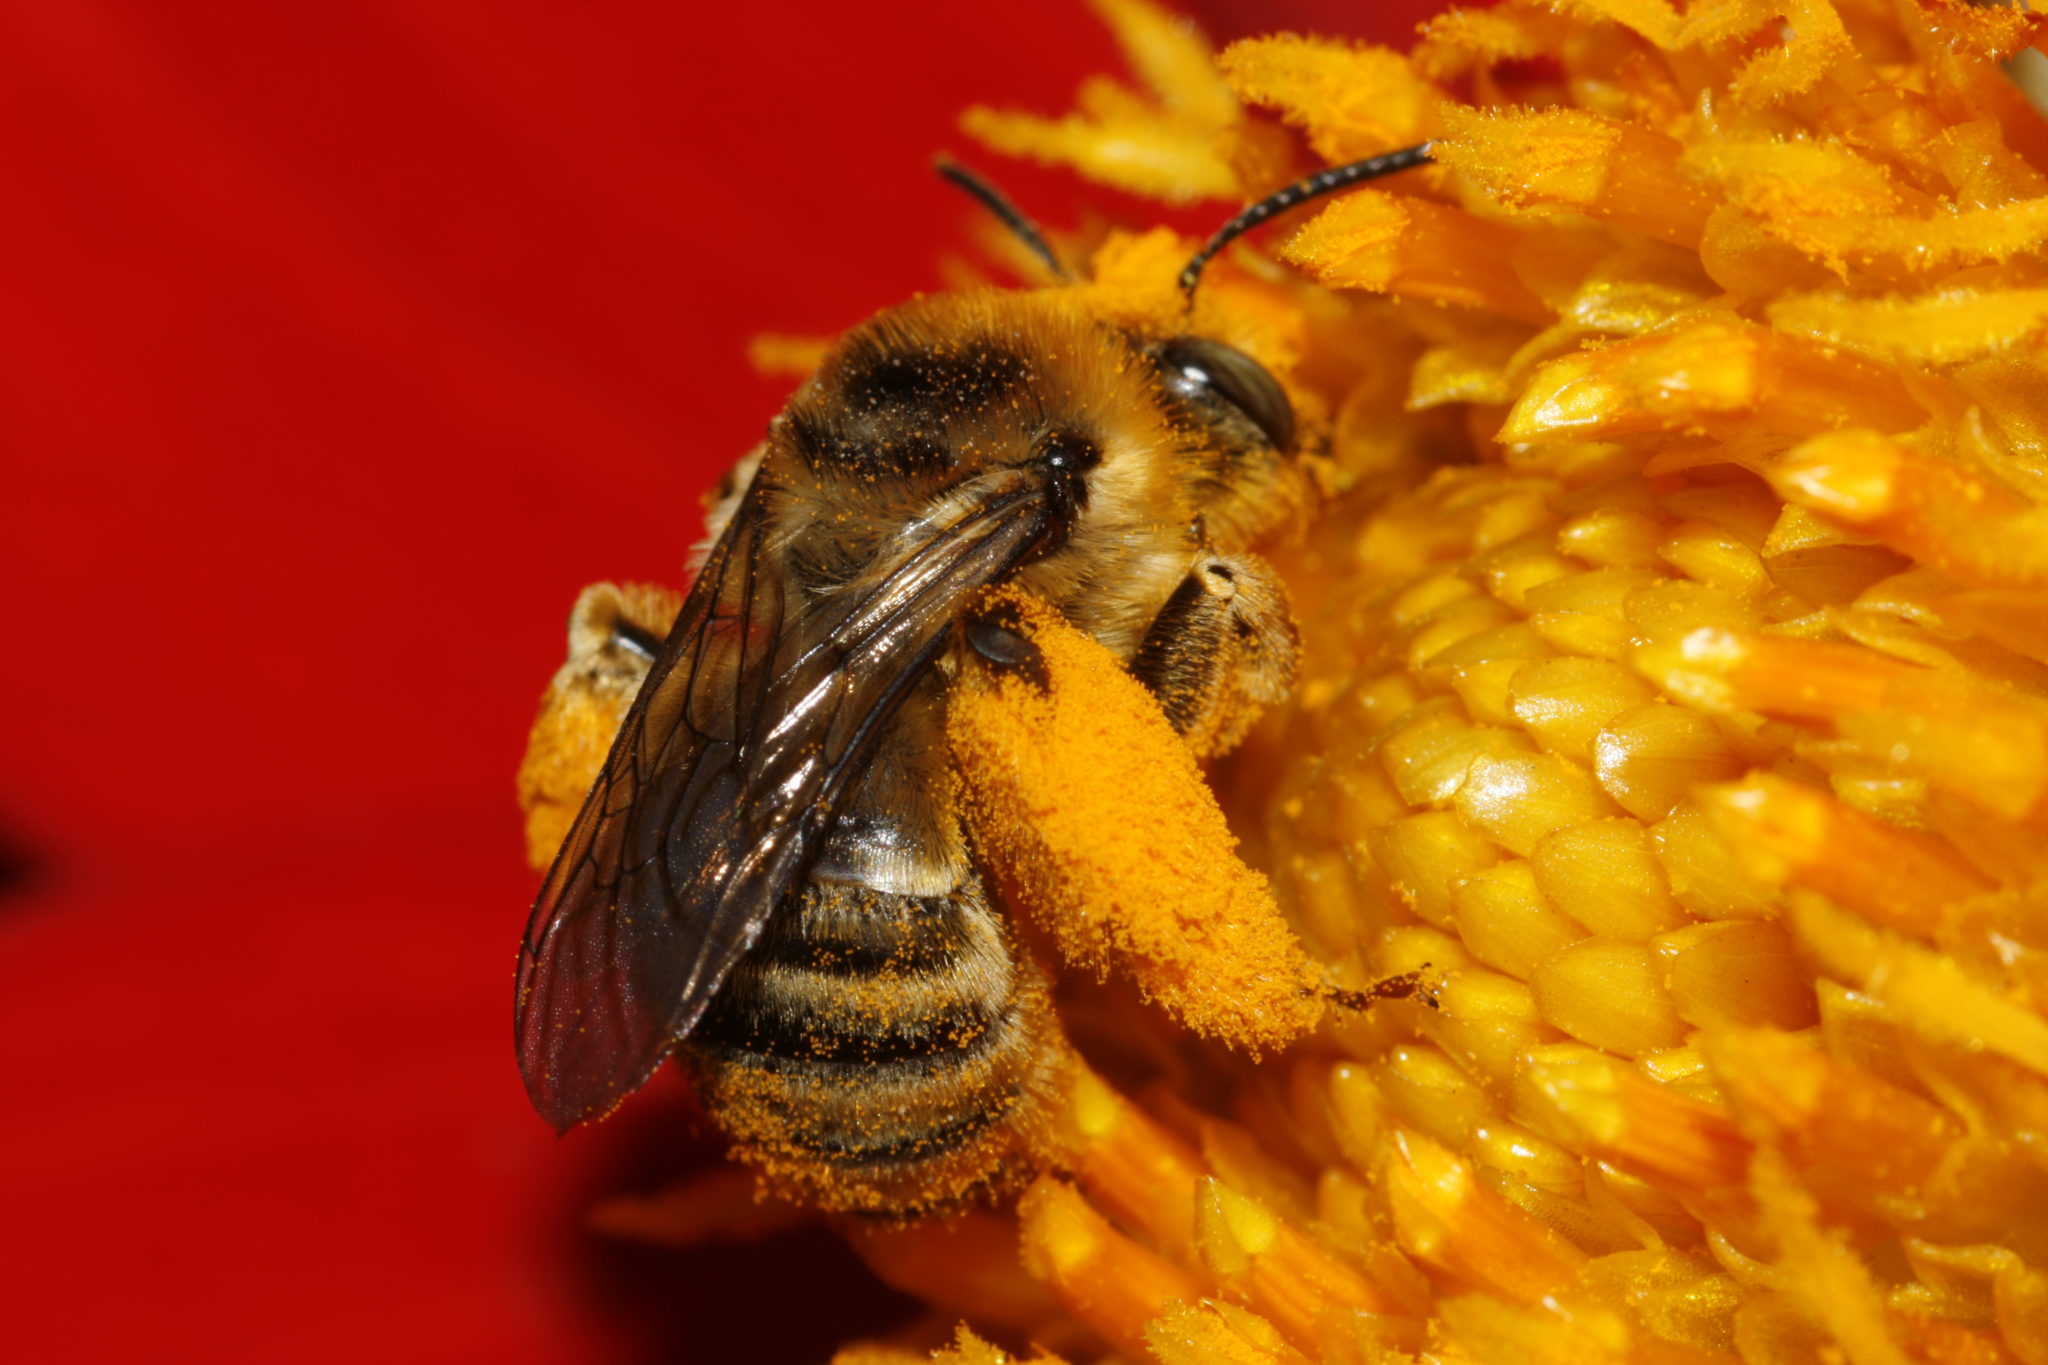 Native bee. Photo by: Celeste Ets Hokin